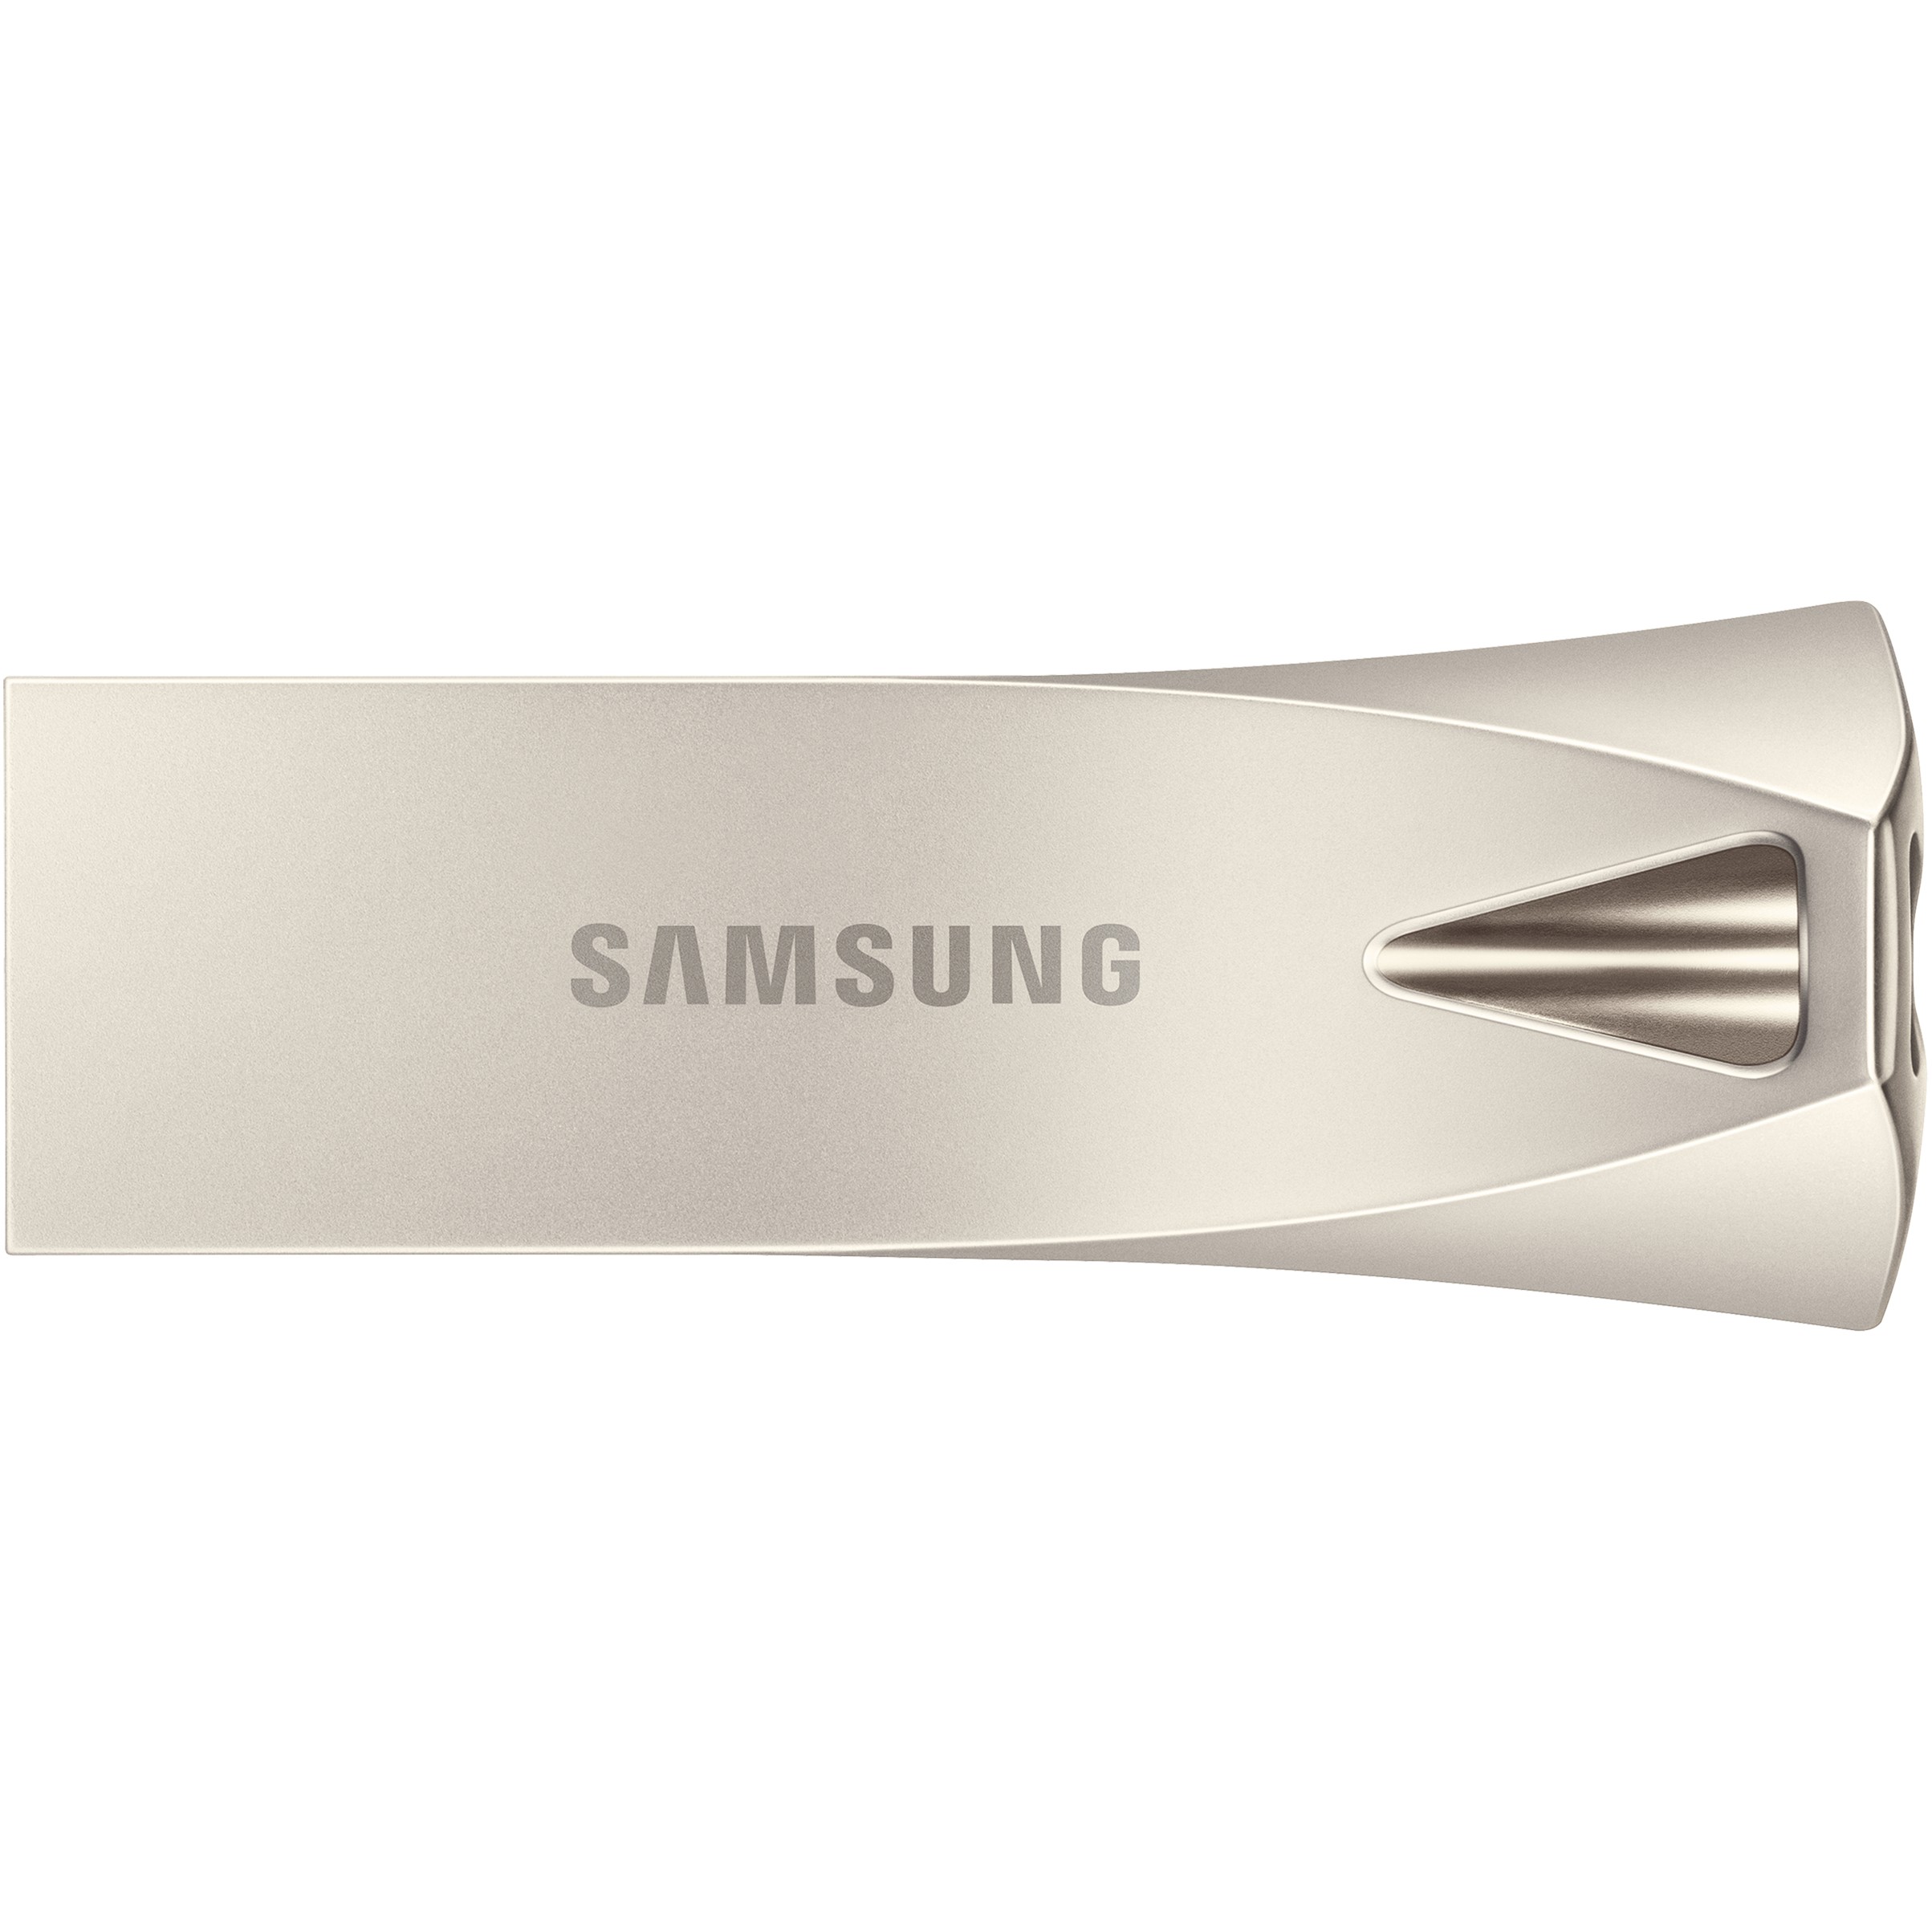 SAMSUNG MUF-64BE3/APC, USB-Stick, Samsung MUF-64BE USB  (BILD1)